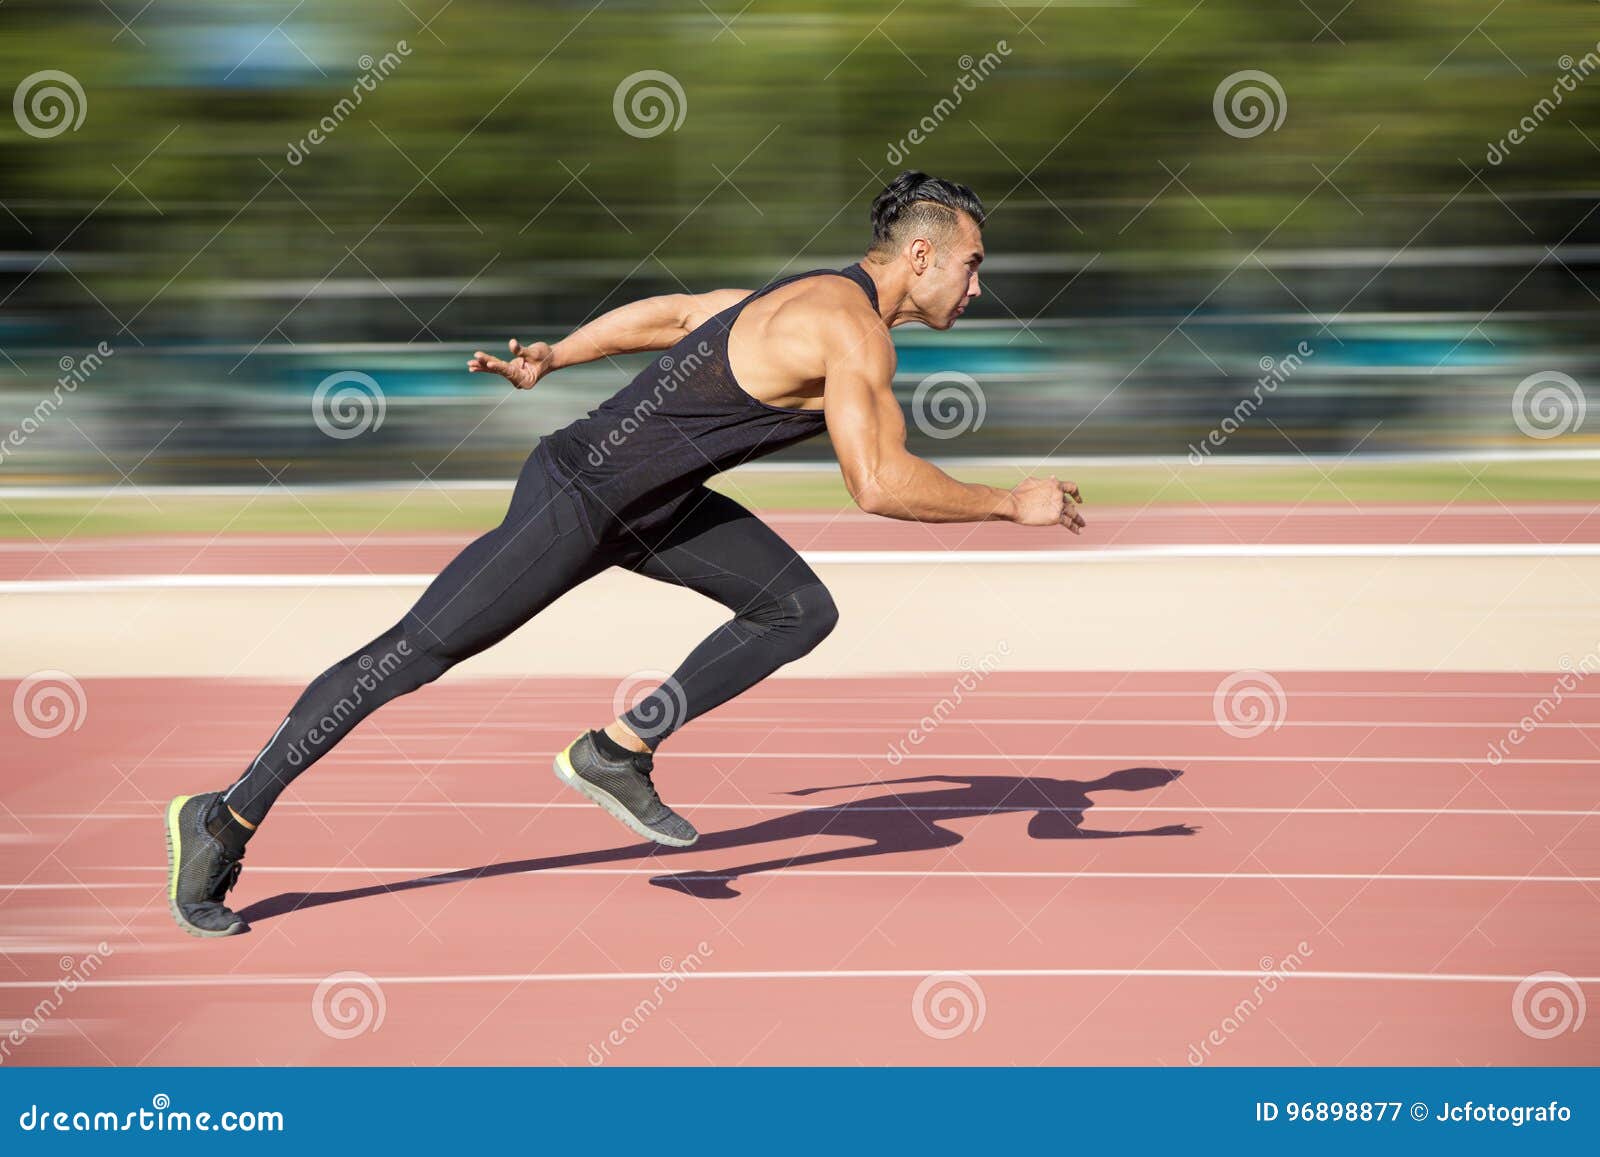 Man running stock image. Image of beginning, athletics - 96898877